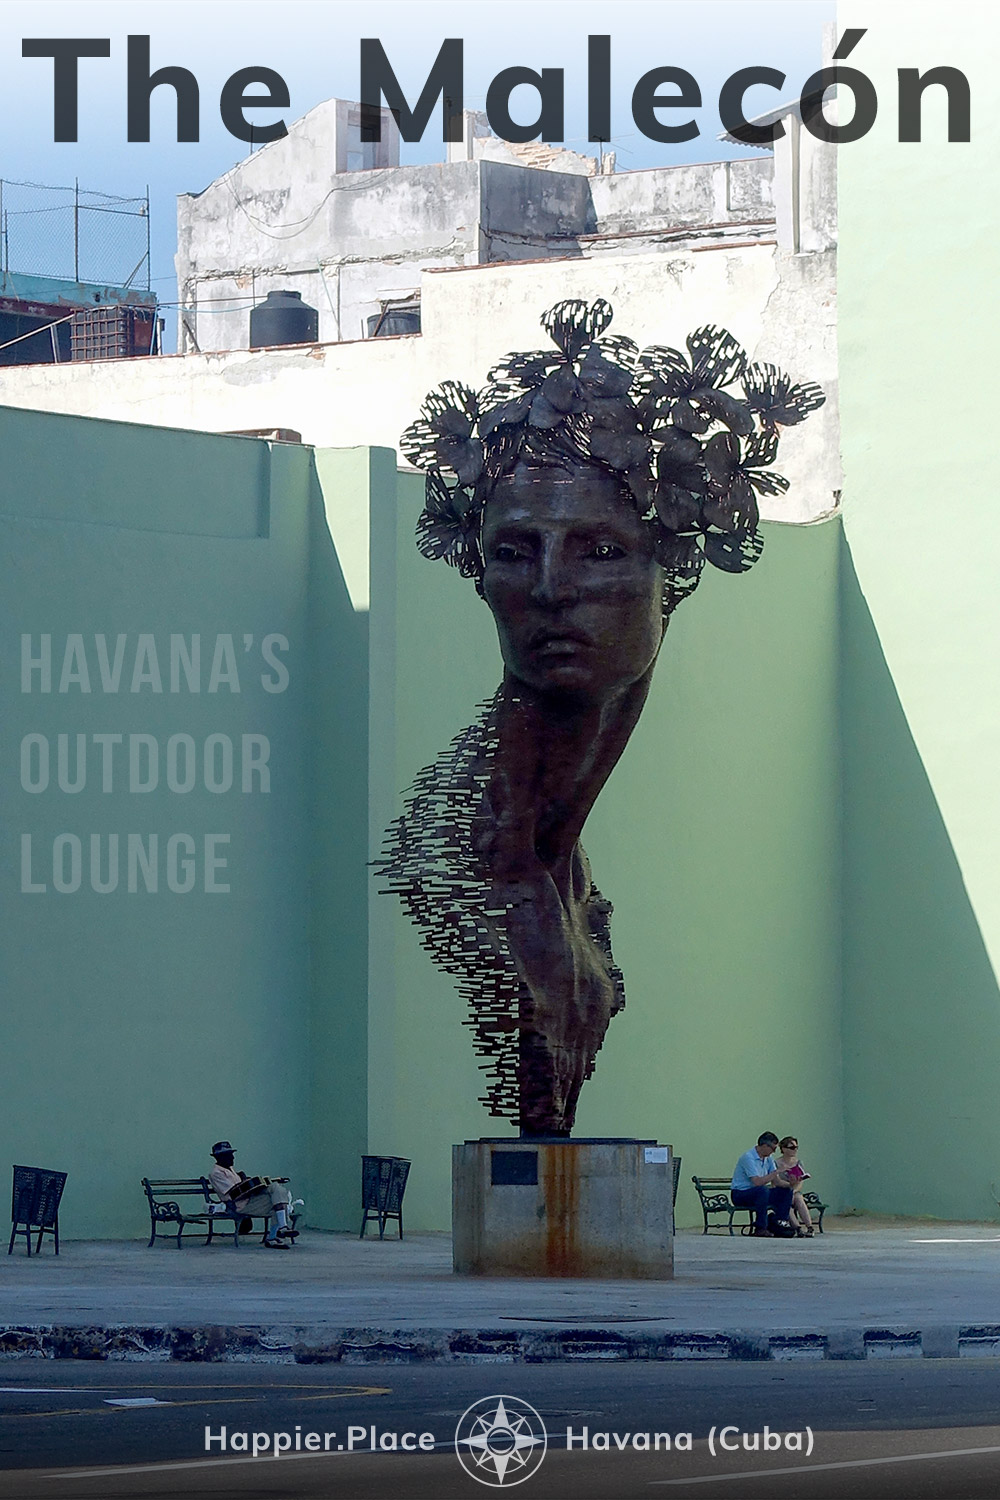 The Malecón, Havana's Outdoor Lounge, Primavera sculpture, woman's head